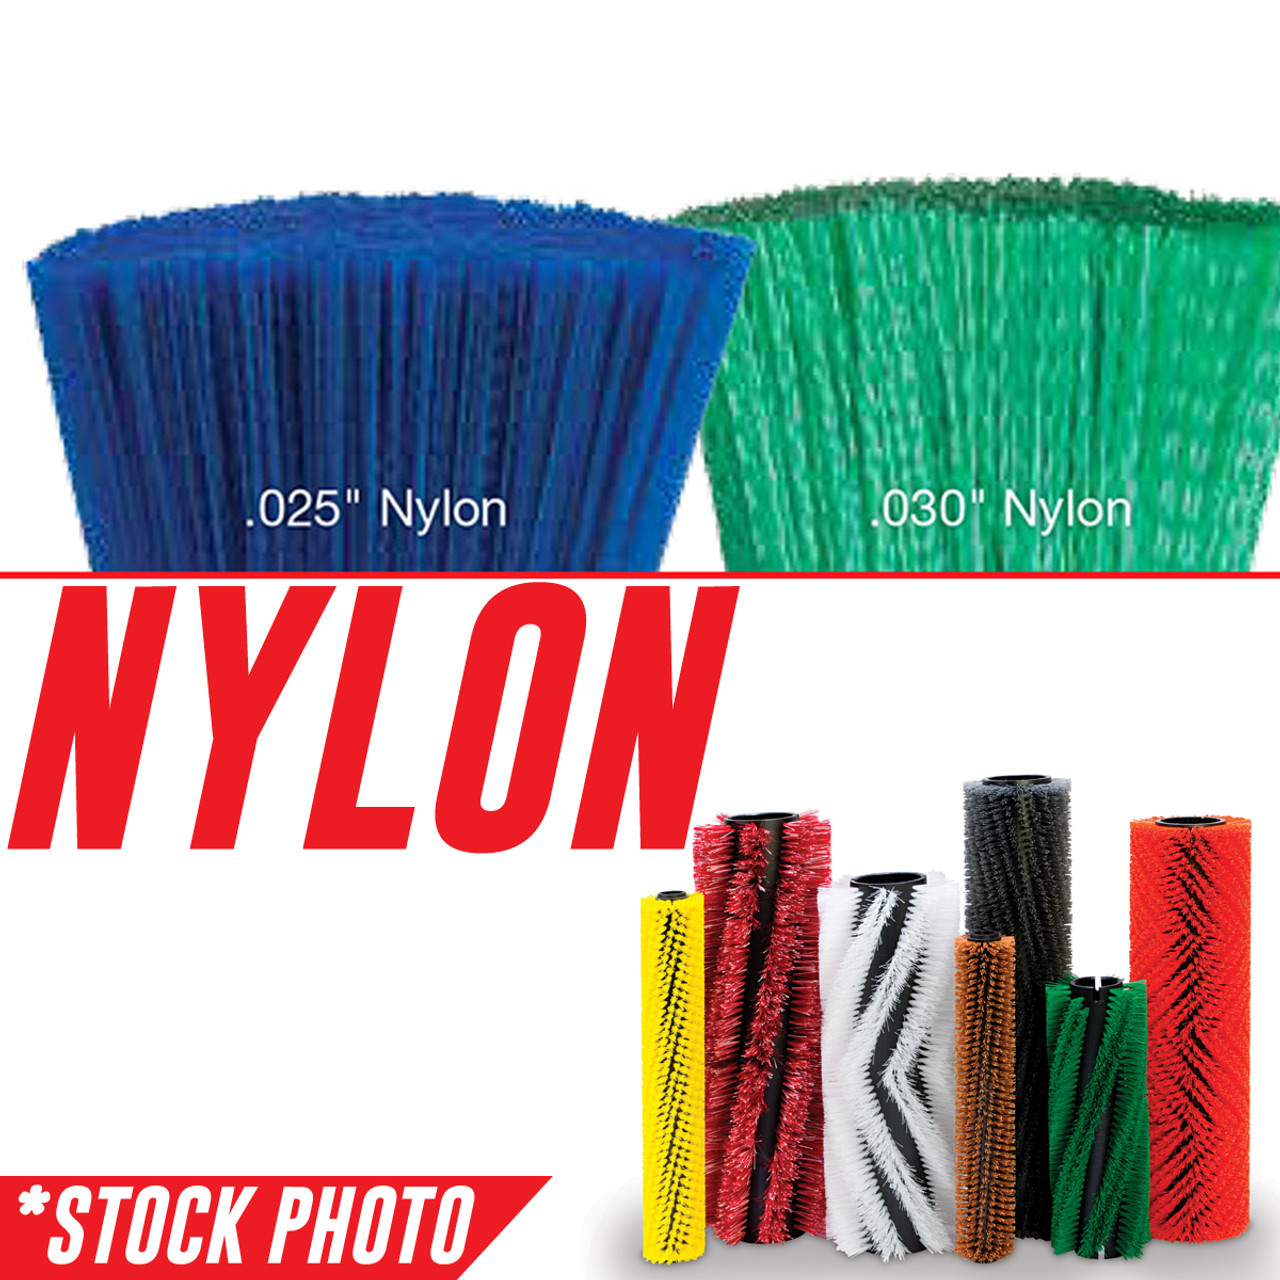 28-521N: 28" Cylindrical Brush 16 Single Row Nylon fits Factory Cat Models 28, 2800, 2800EX, 29, 3000, 350/28", GTX 30, Magnum 30